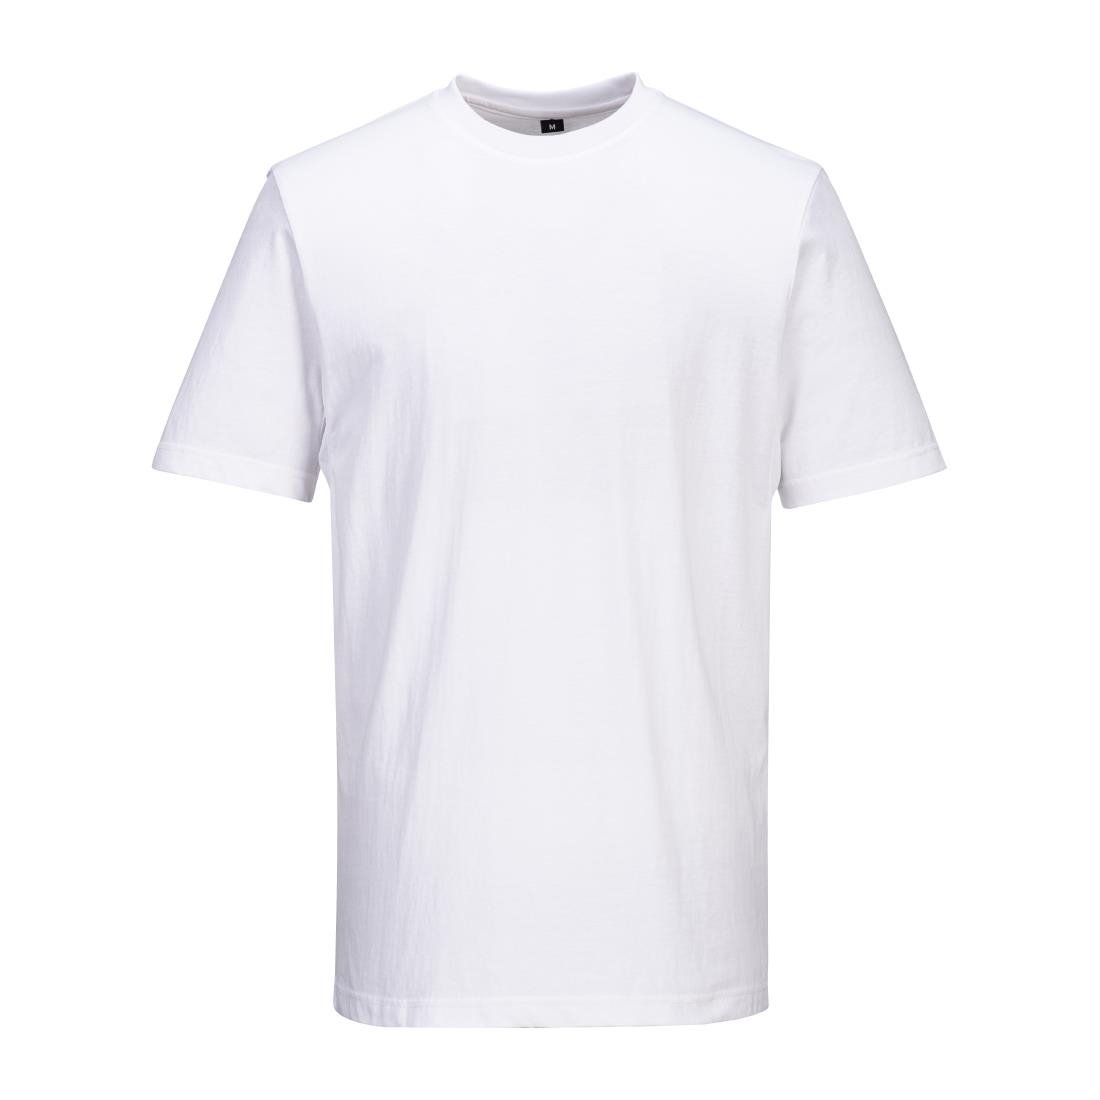 BA189-XL Portwest Chef T-Shirt Mesh White Size XL